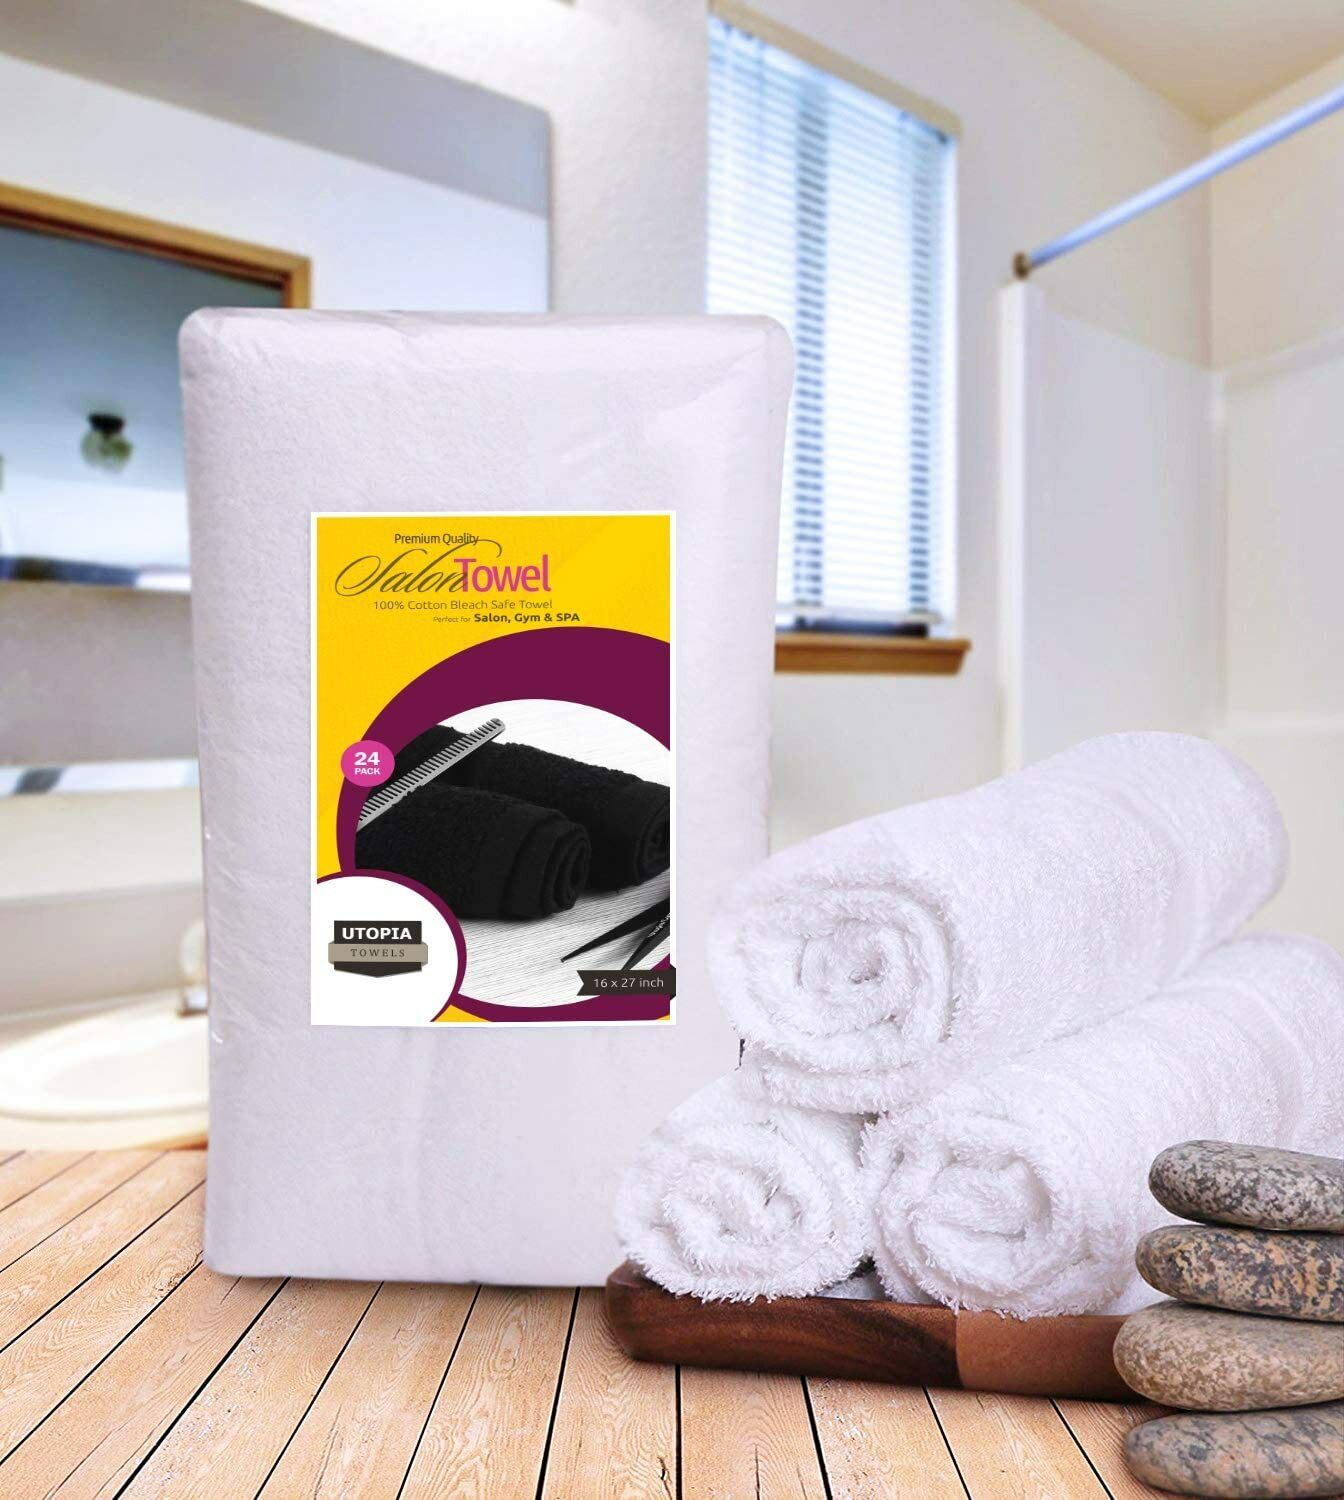 UTOPIA Cotton Salon Towels 16-Inch x 27-Inch, 24-Pack, White GORĄCA, niska cena